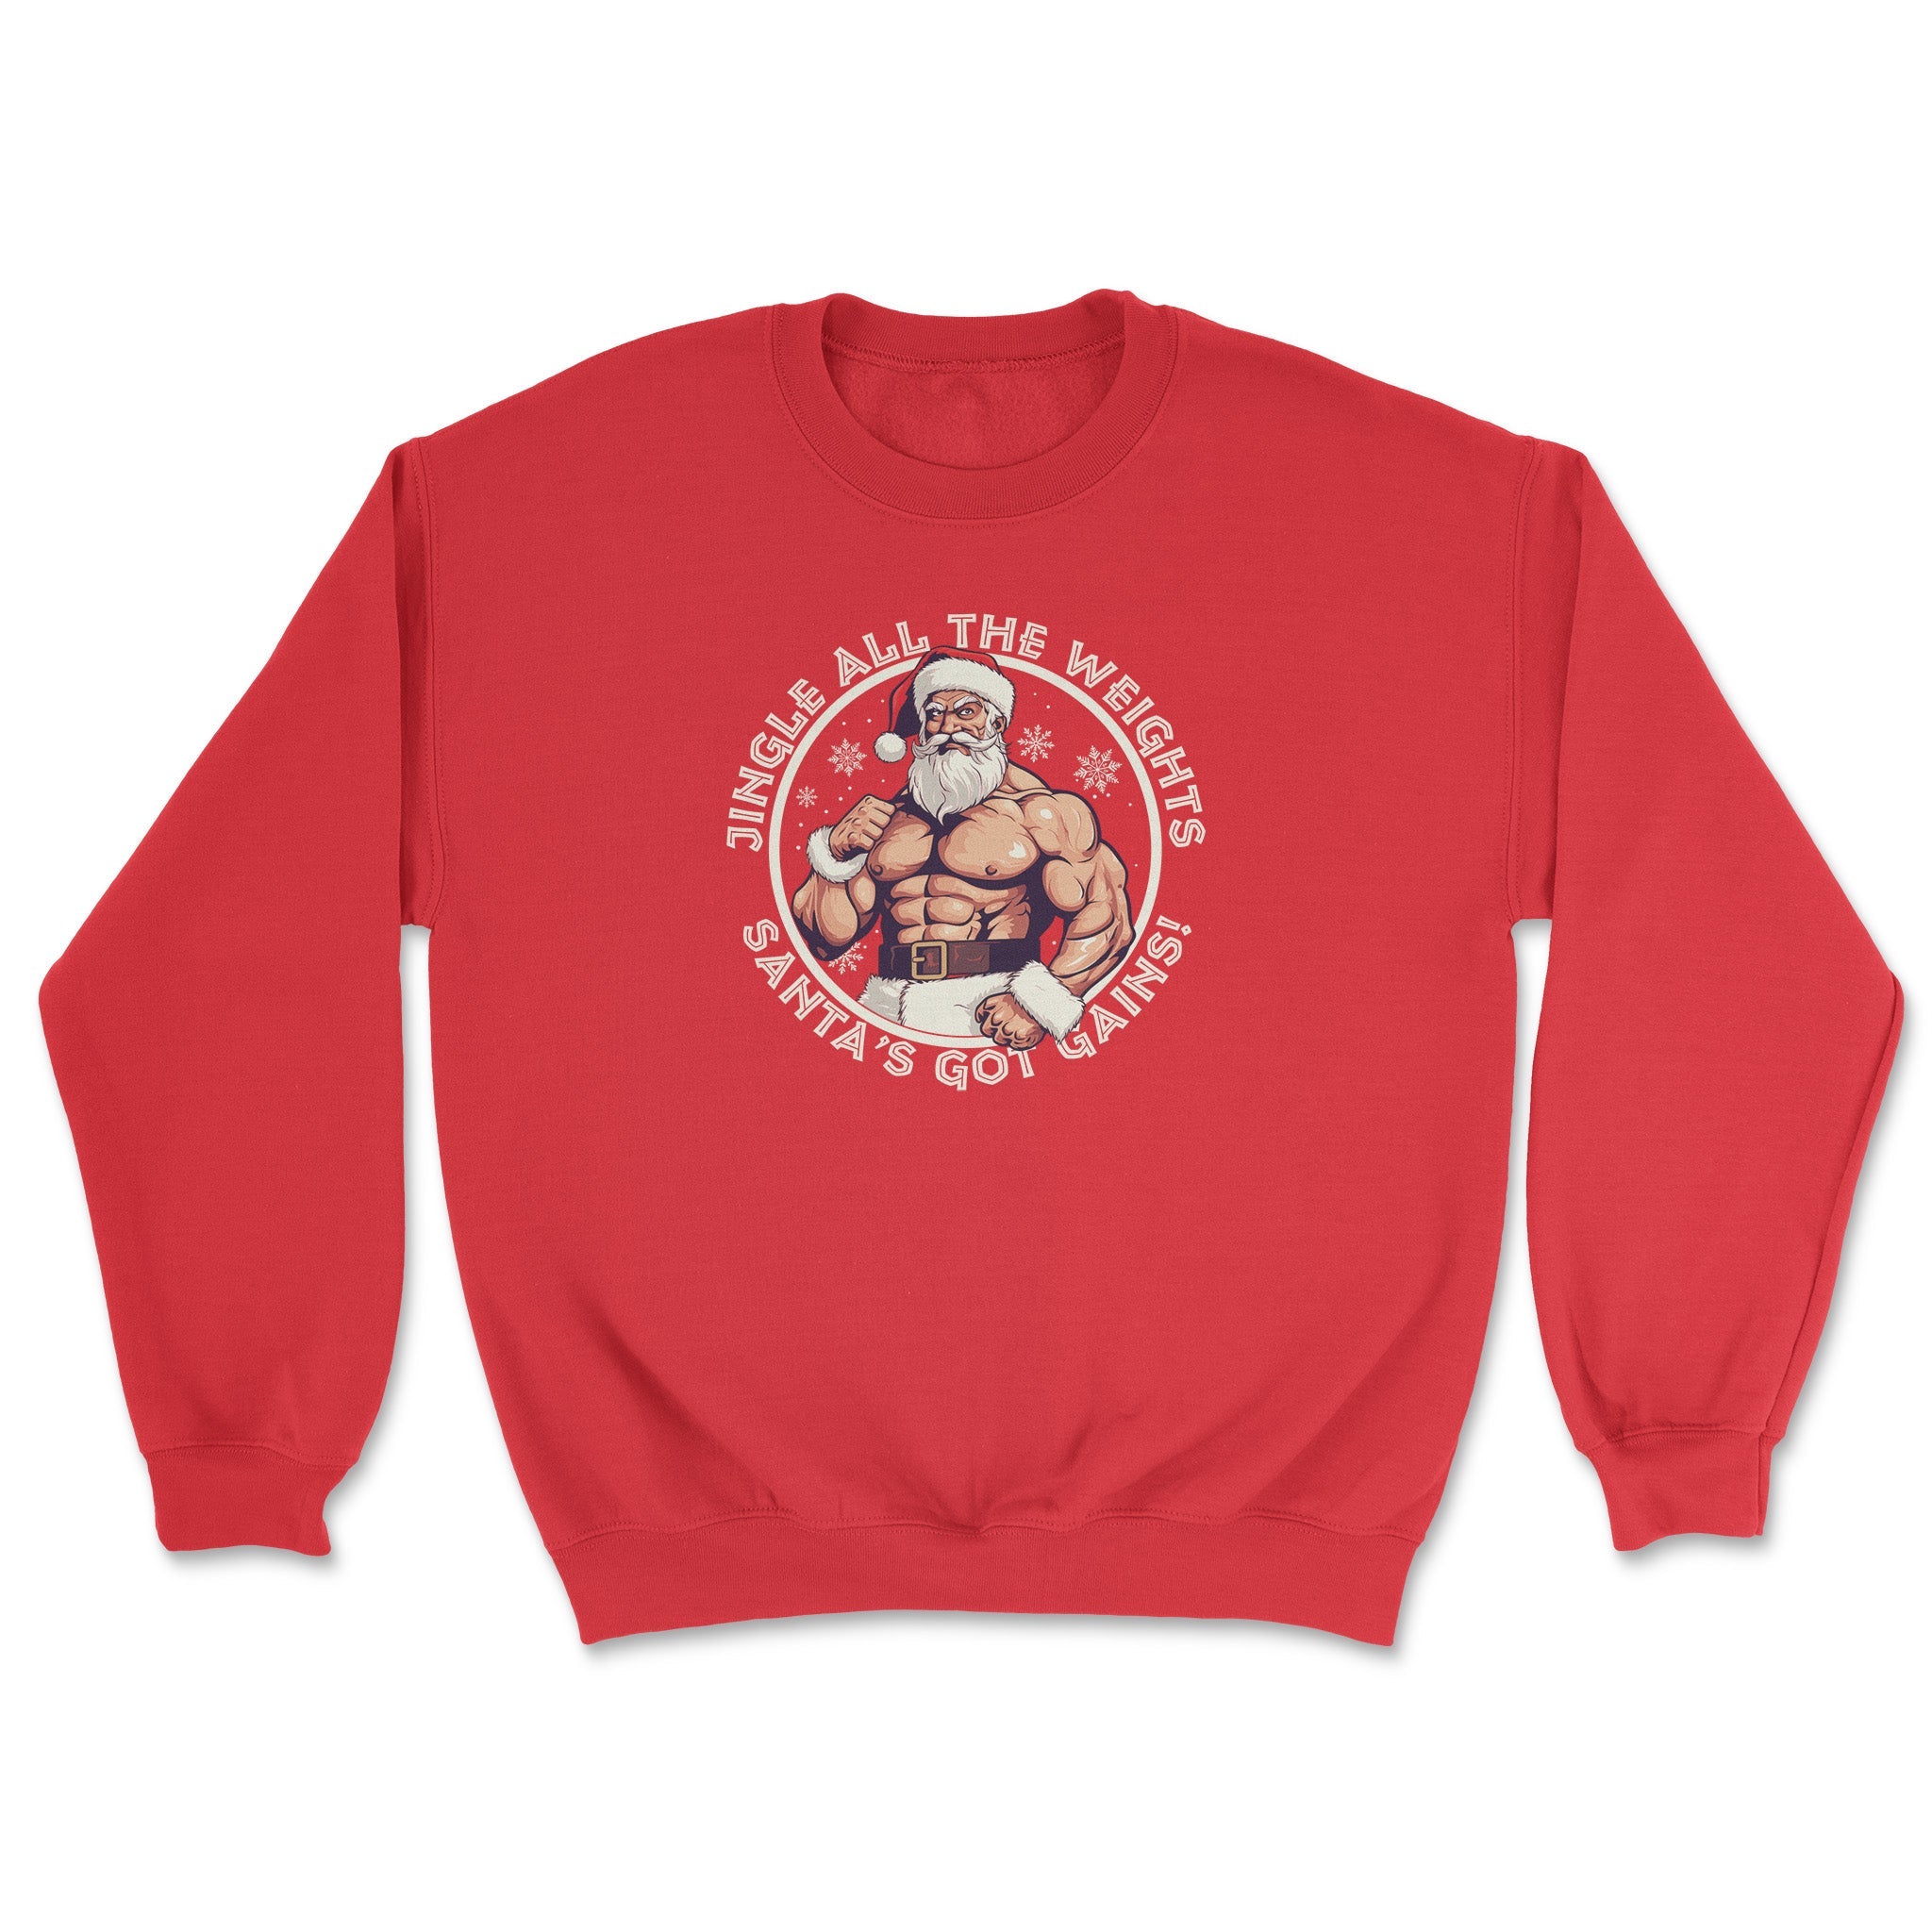 "Jingle All The Weights: Santa's Got Gains" Holiday Sweatshirt - Hunky Tops